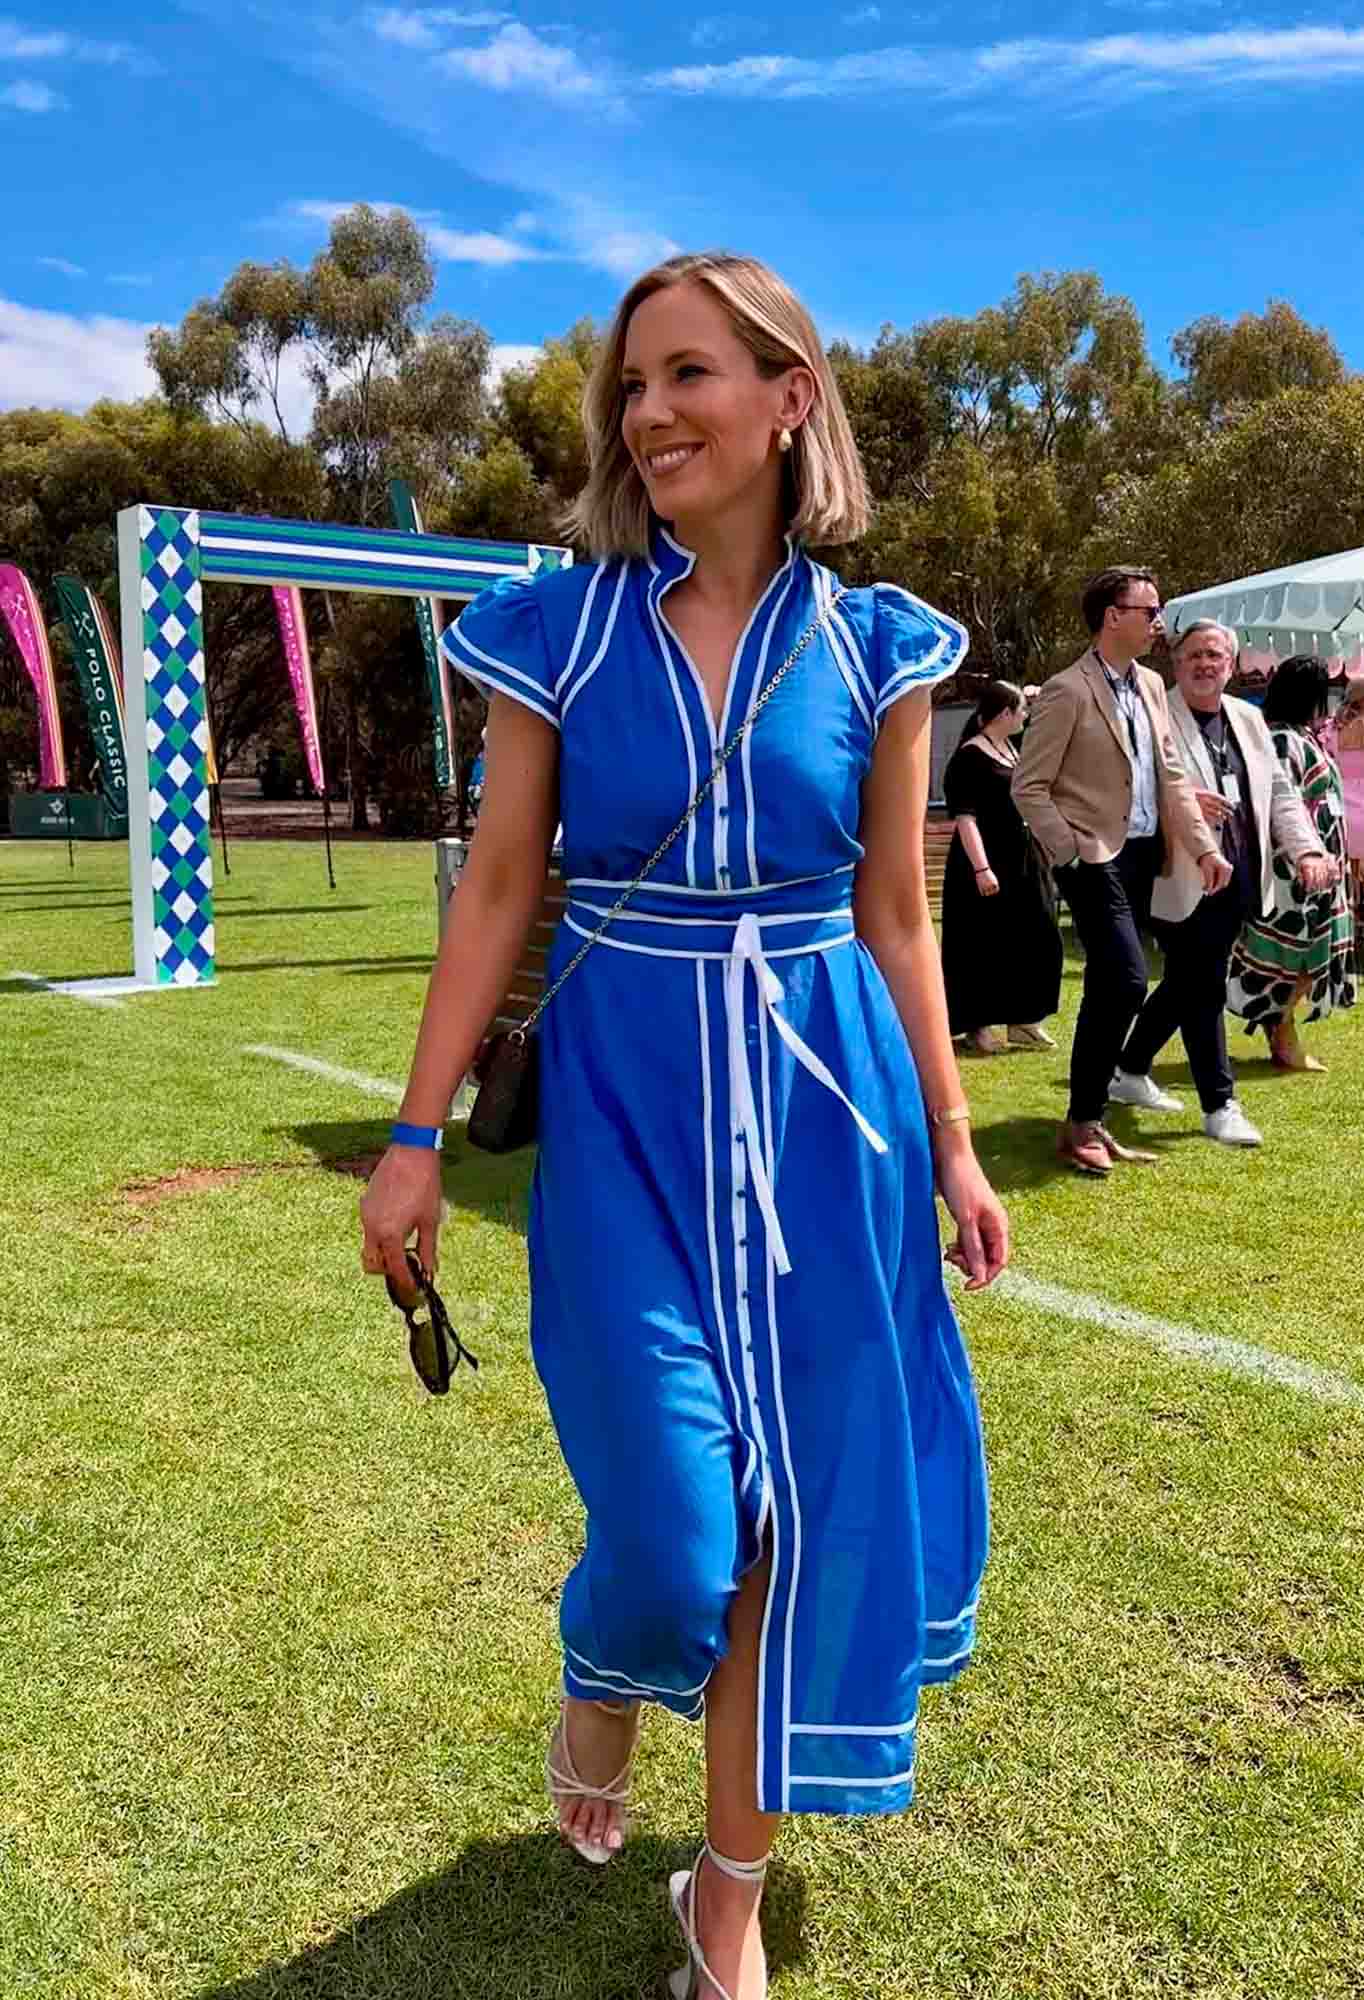 OnceWas Panama Cotton Silk Maxi Dress in Azure